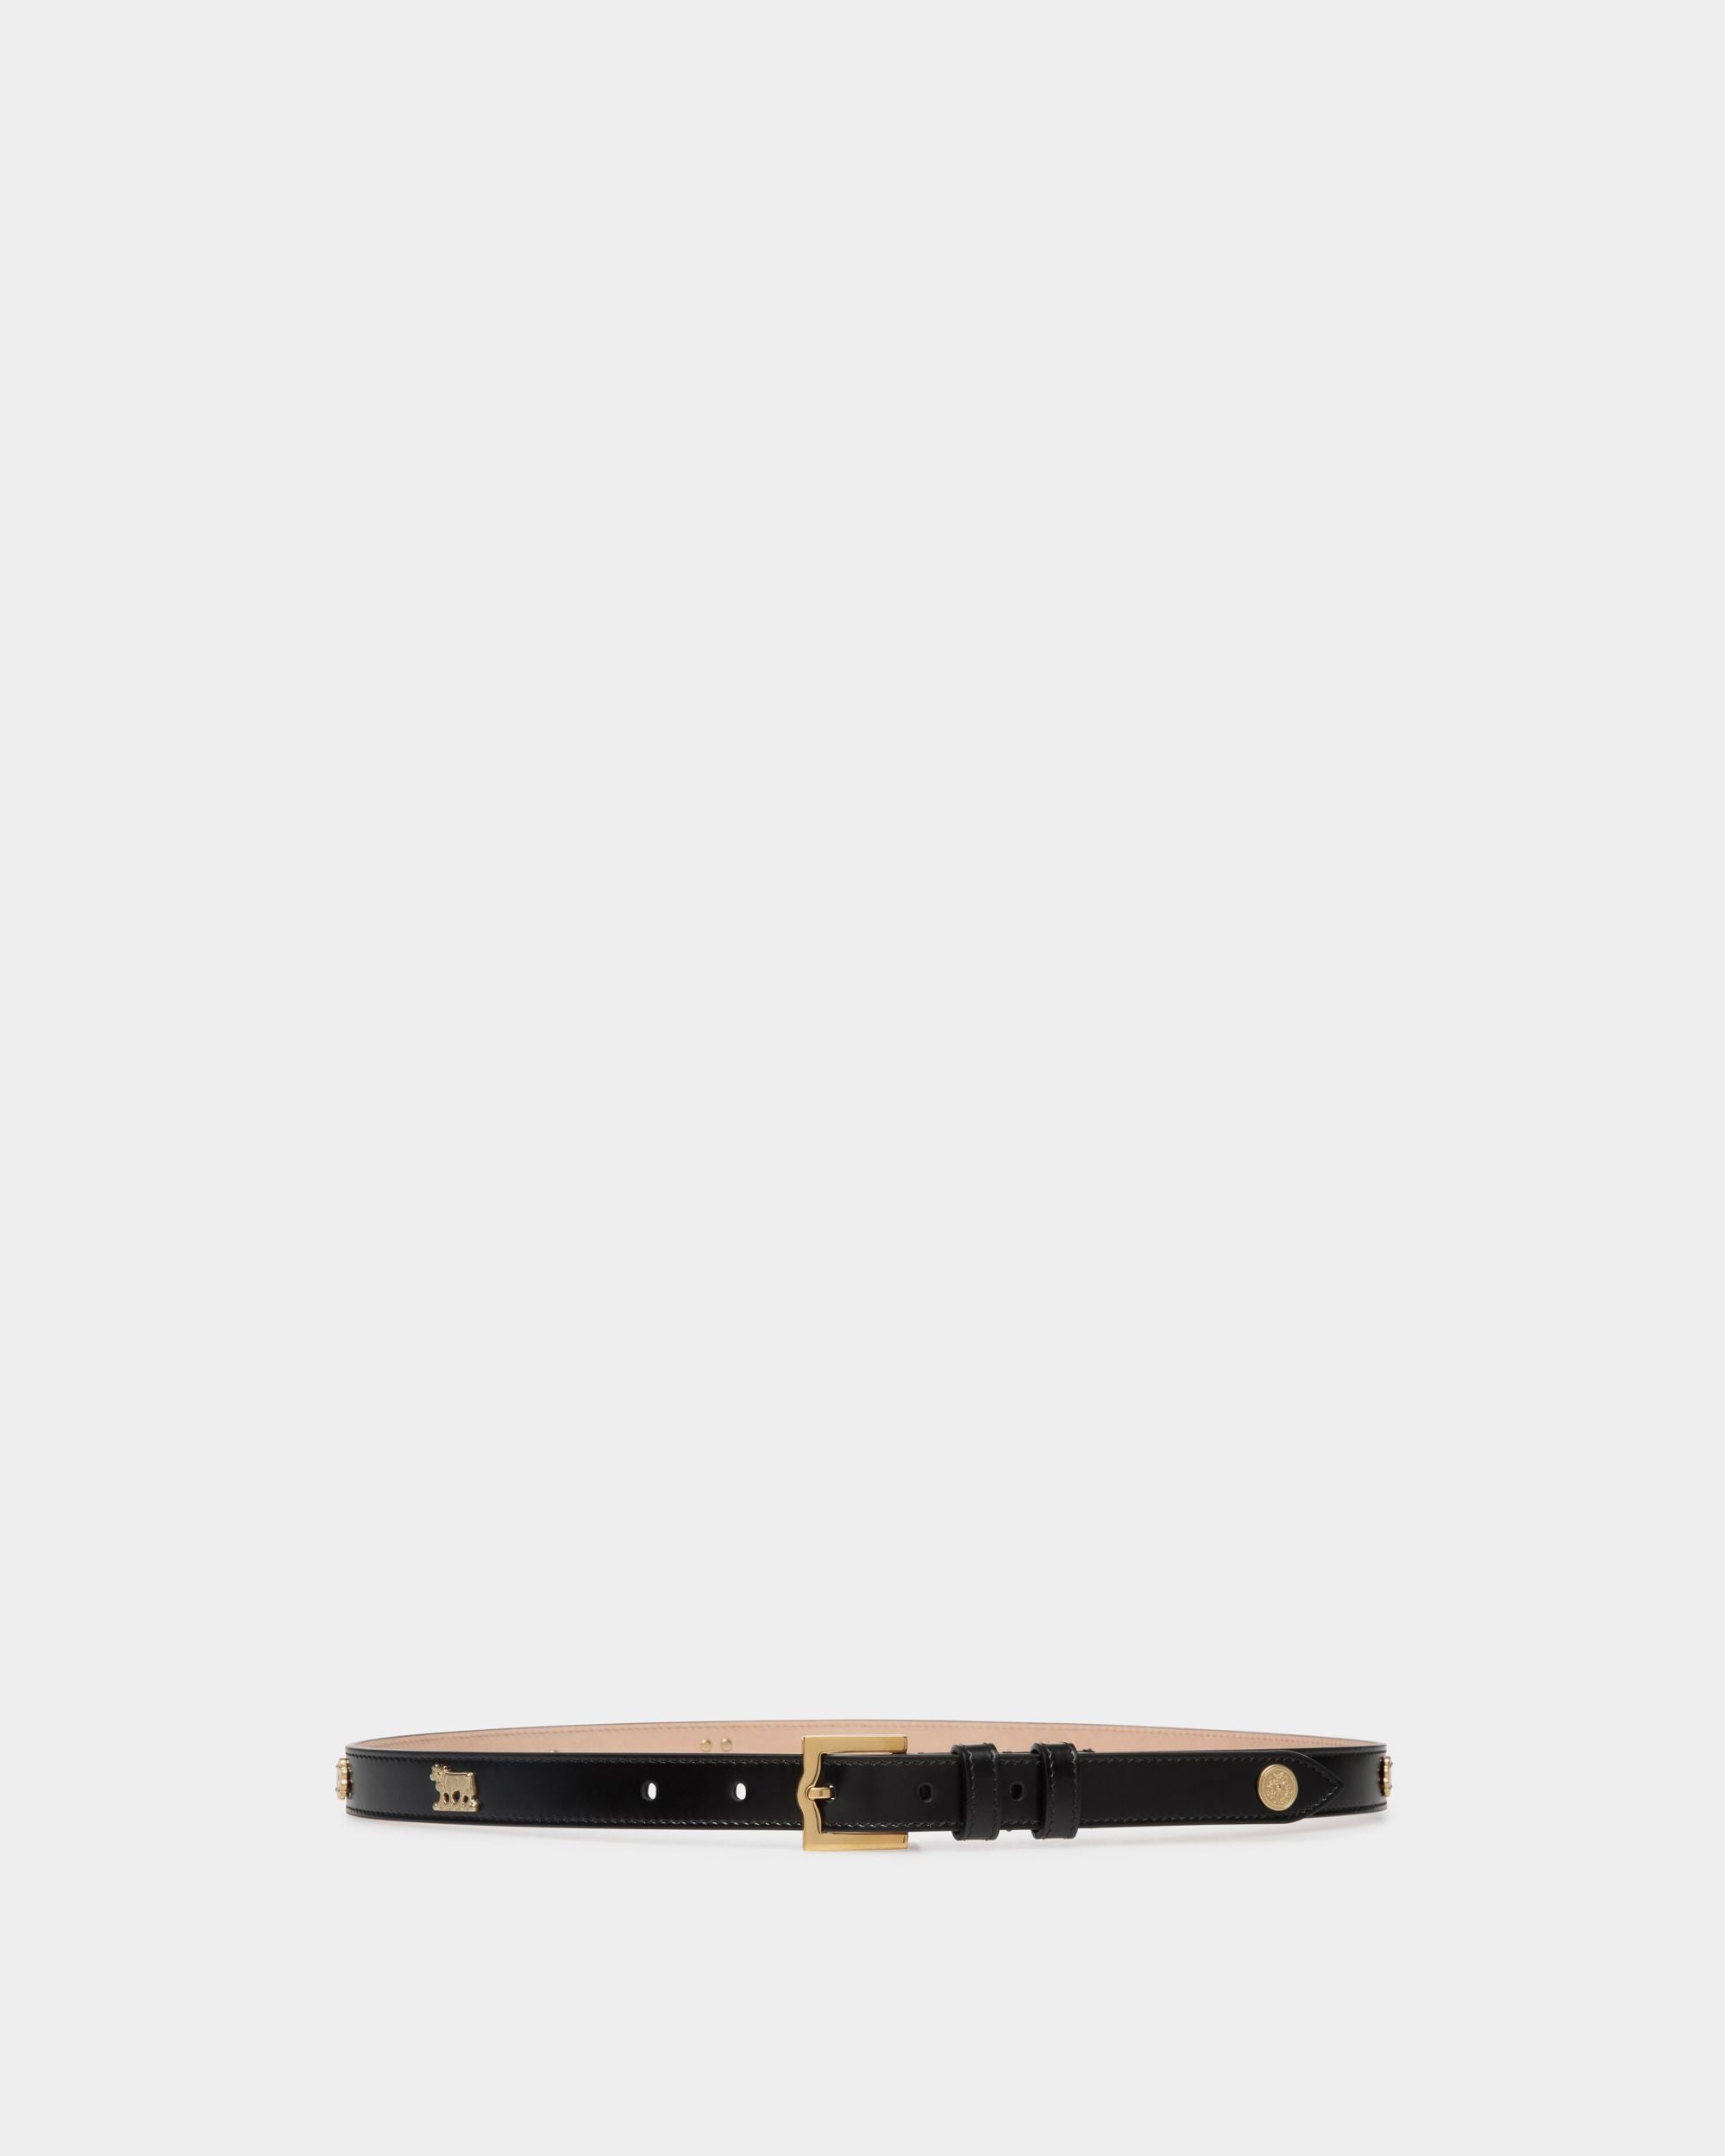 Emblem 85 cm | Cintura da donna in pelle spazzolata nera | Bally | Still Life Fronte